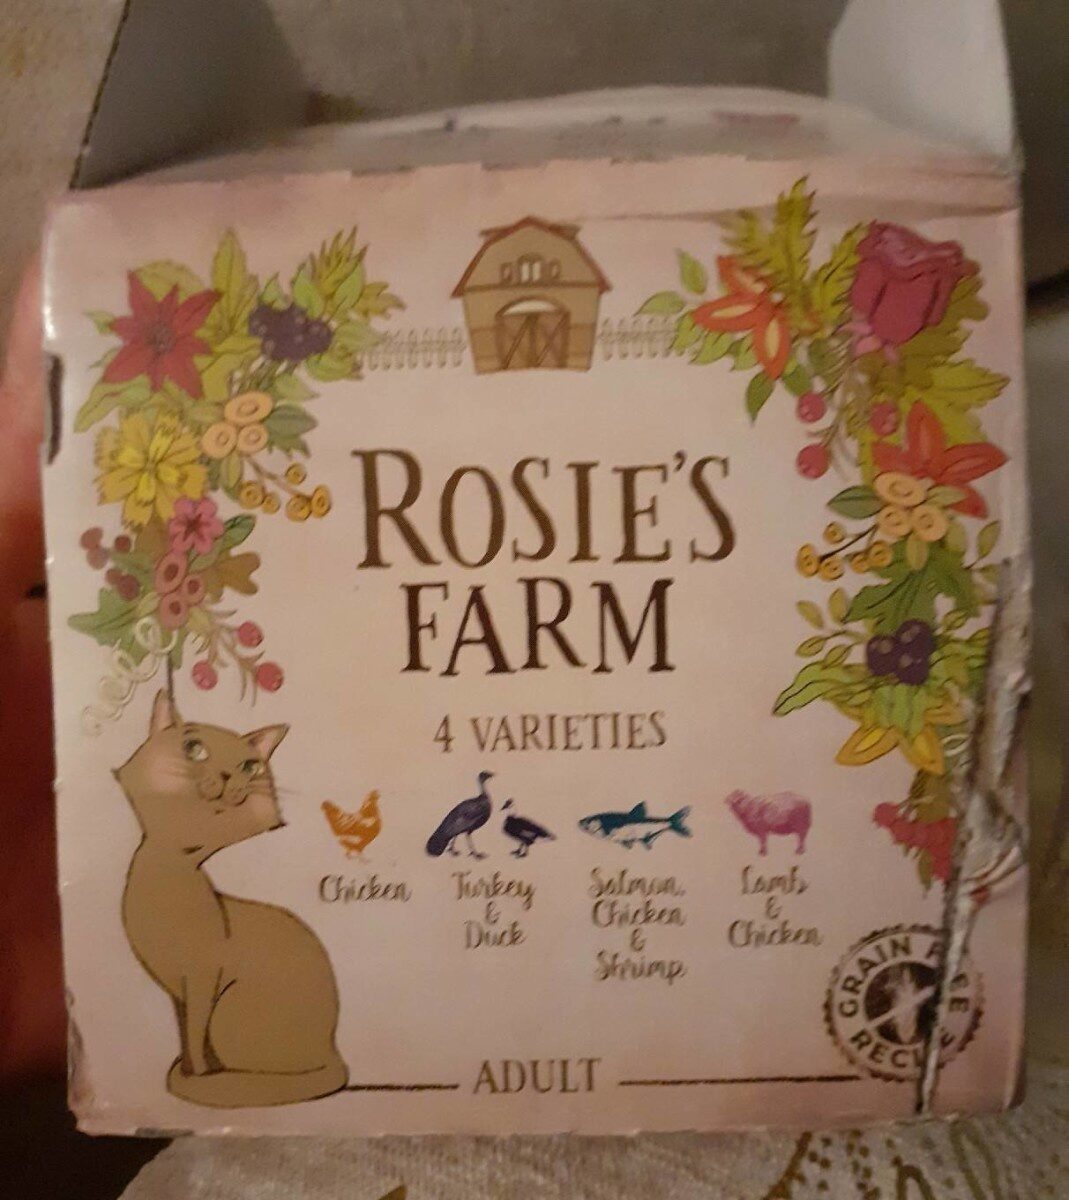 Rosies farm adult - Product - fr